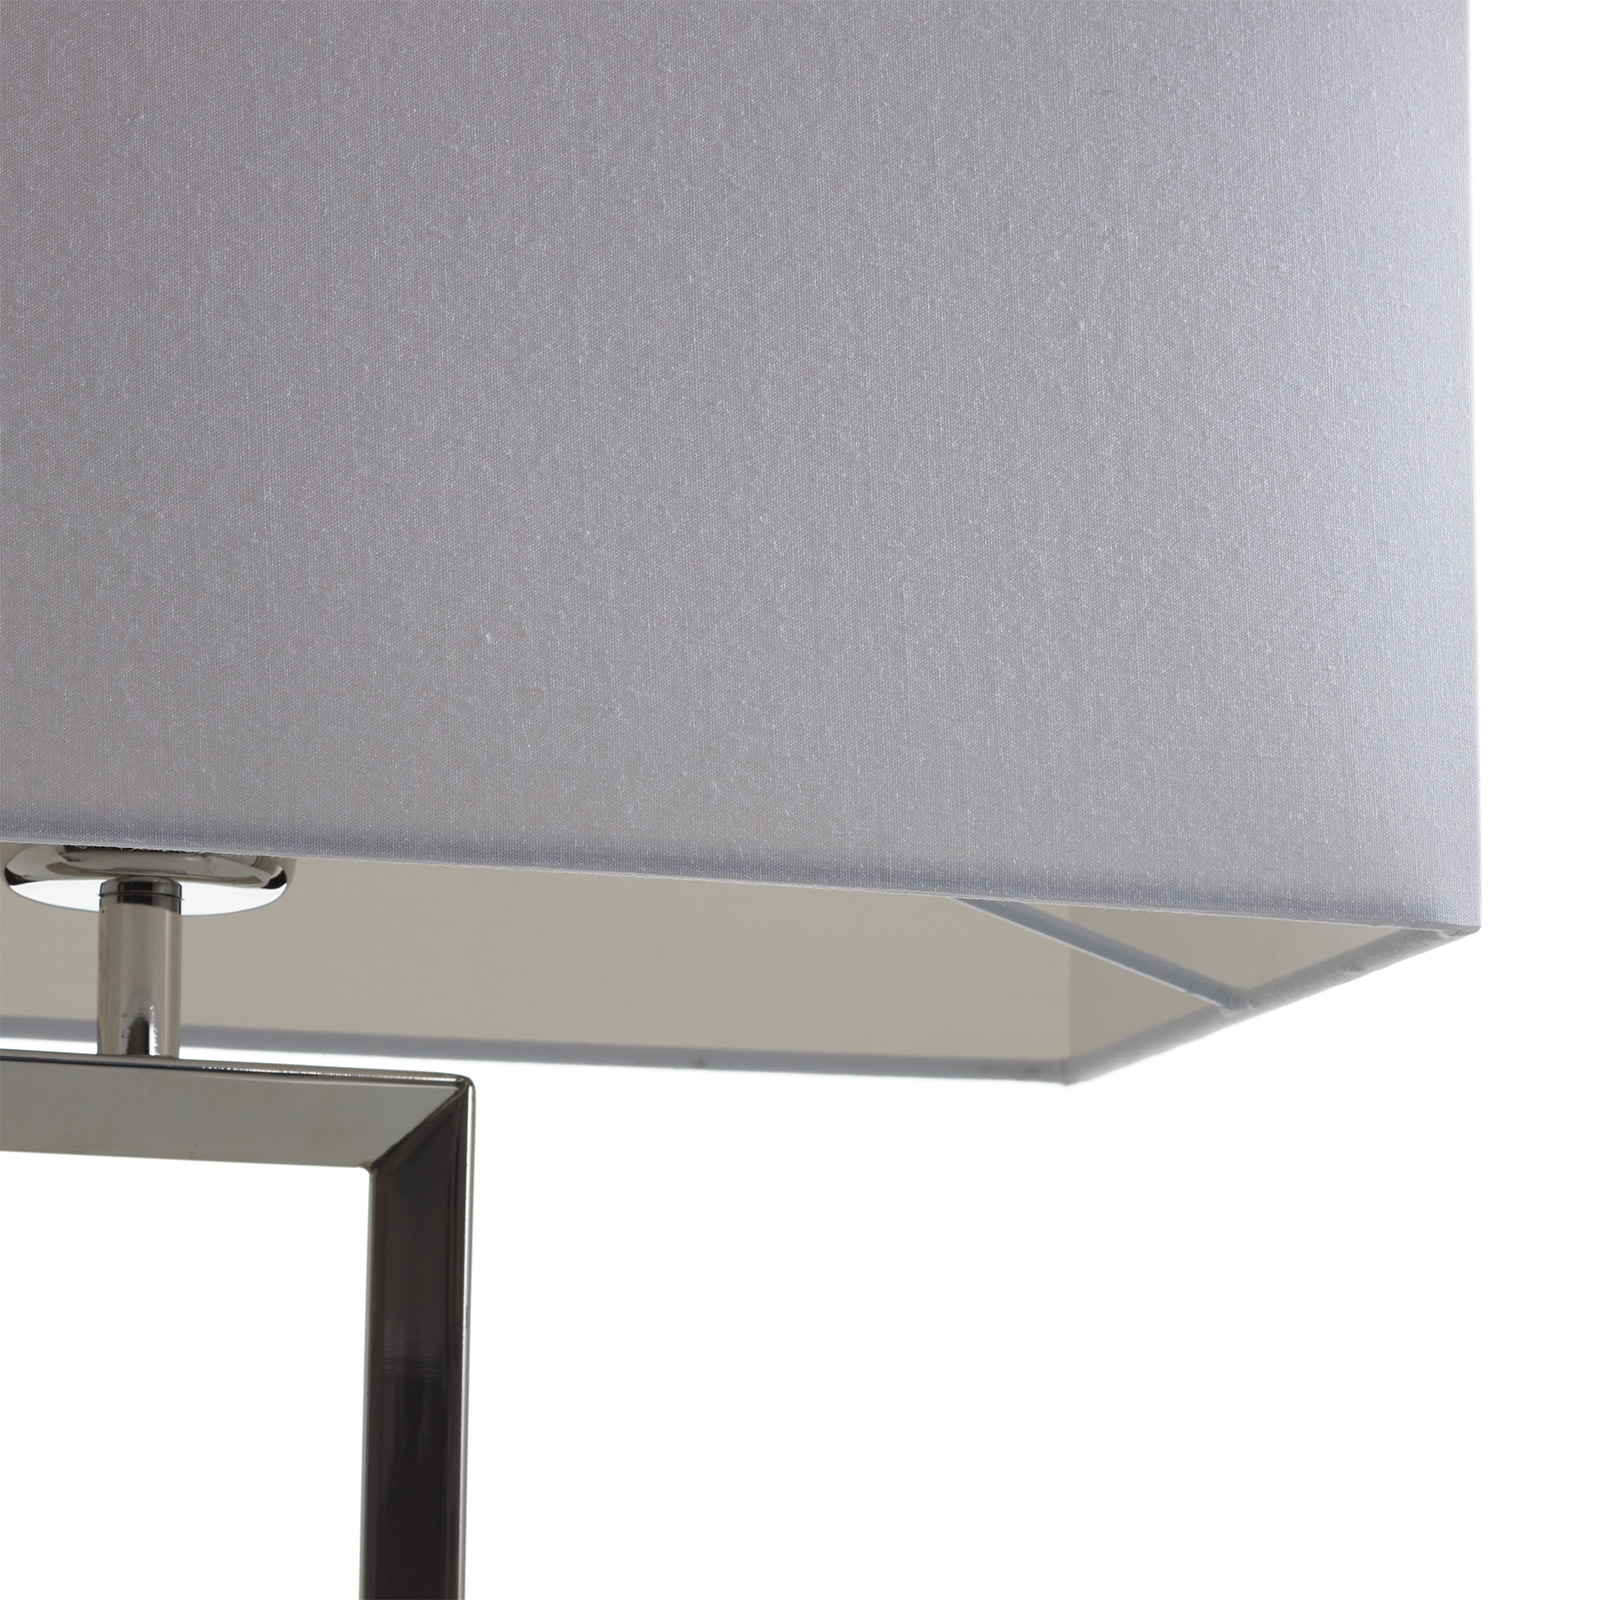 Helestra Enna 2 fabric table lamp, 53 cm high